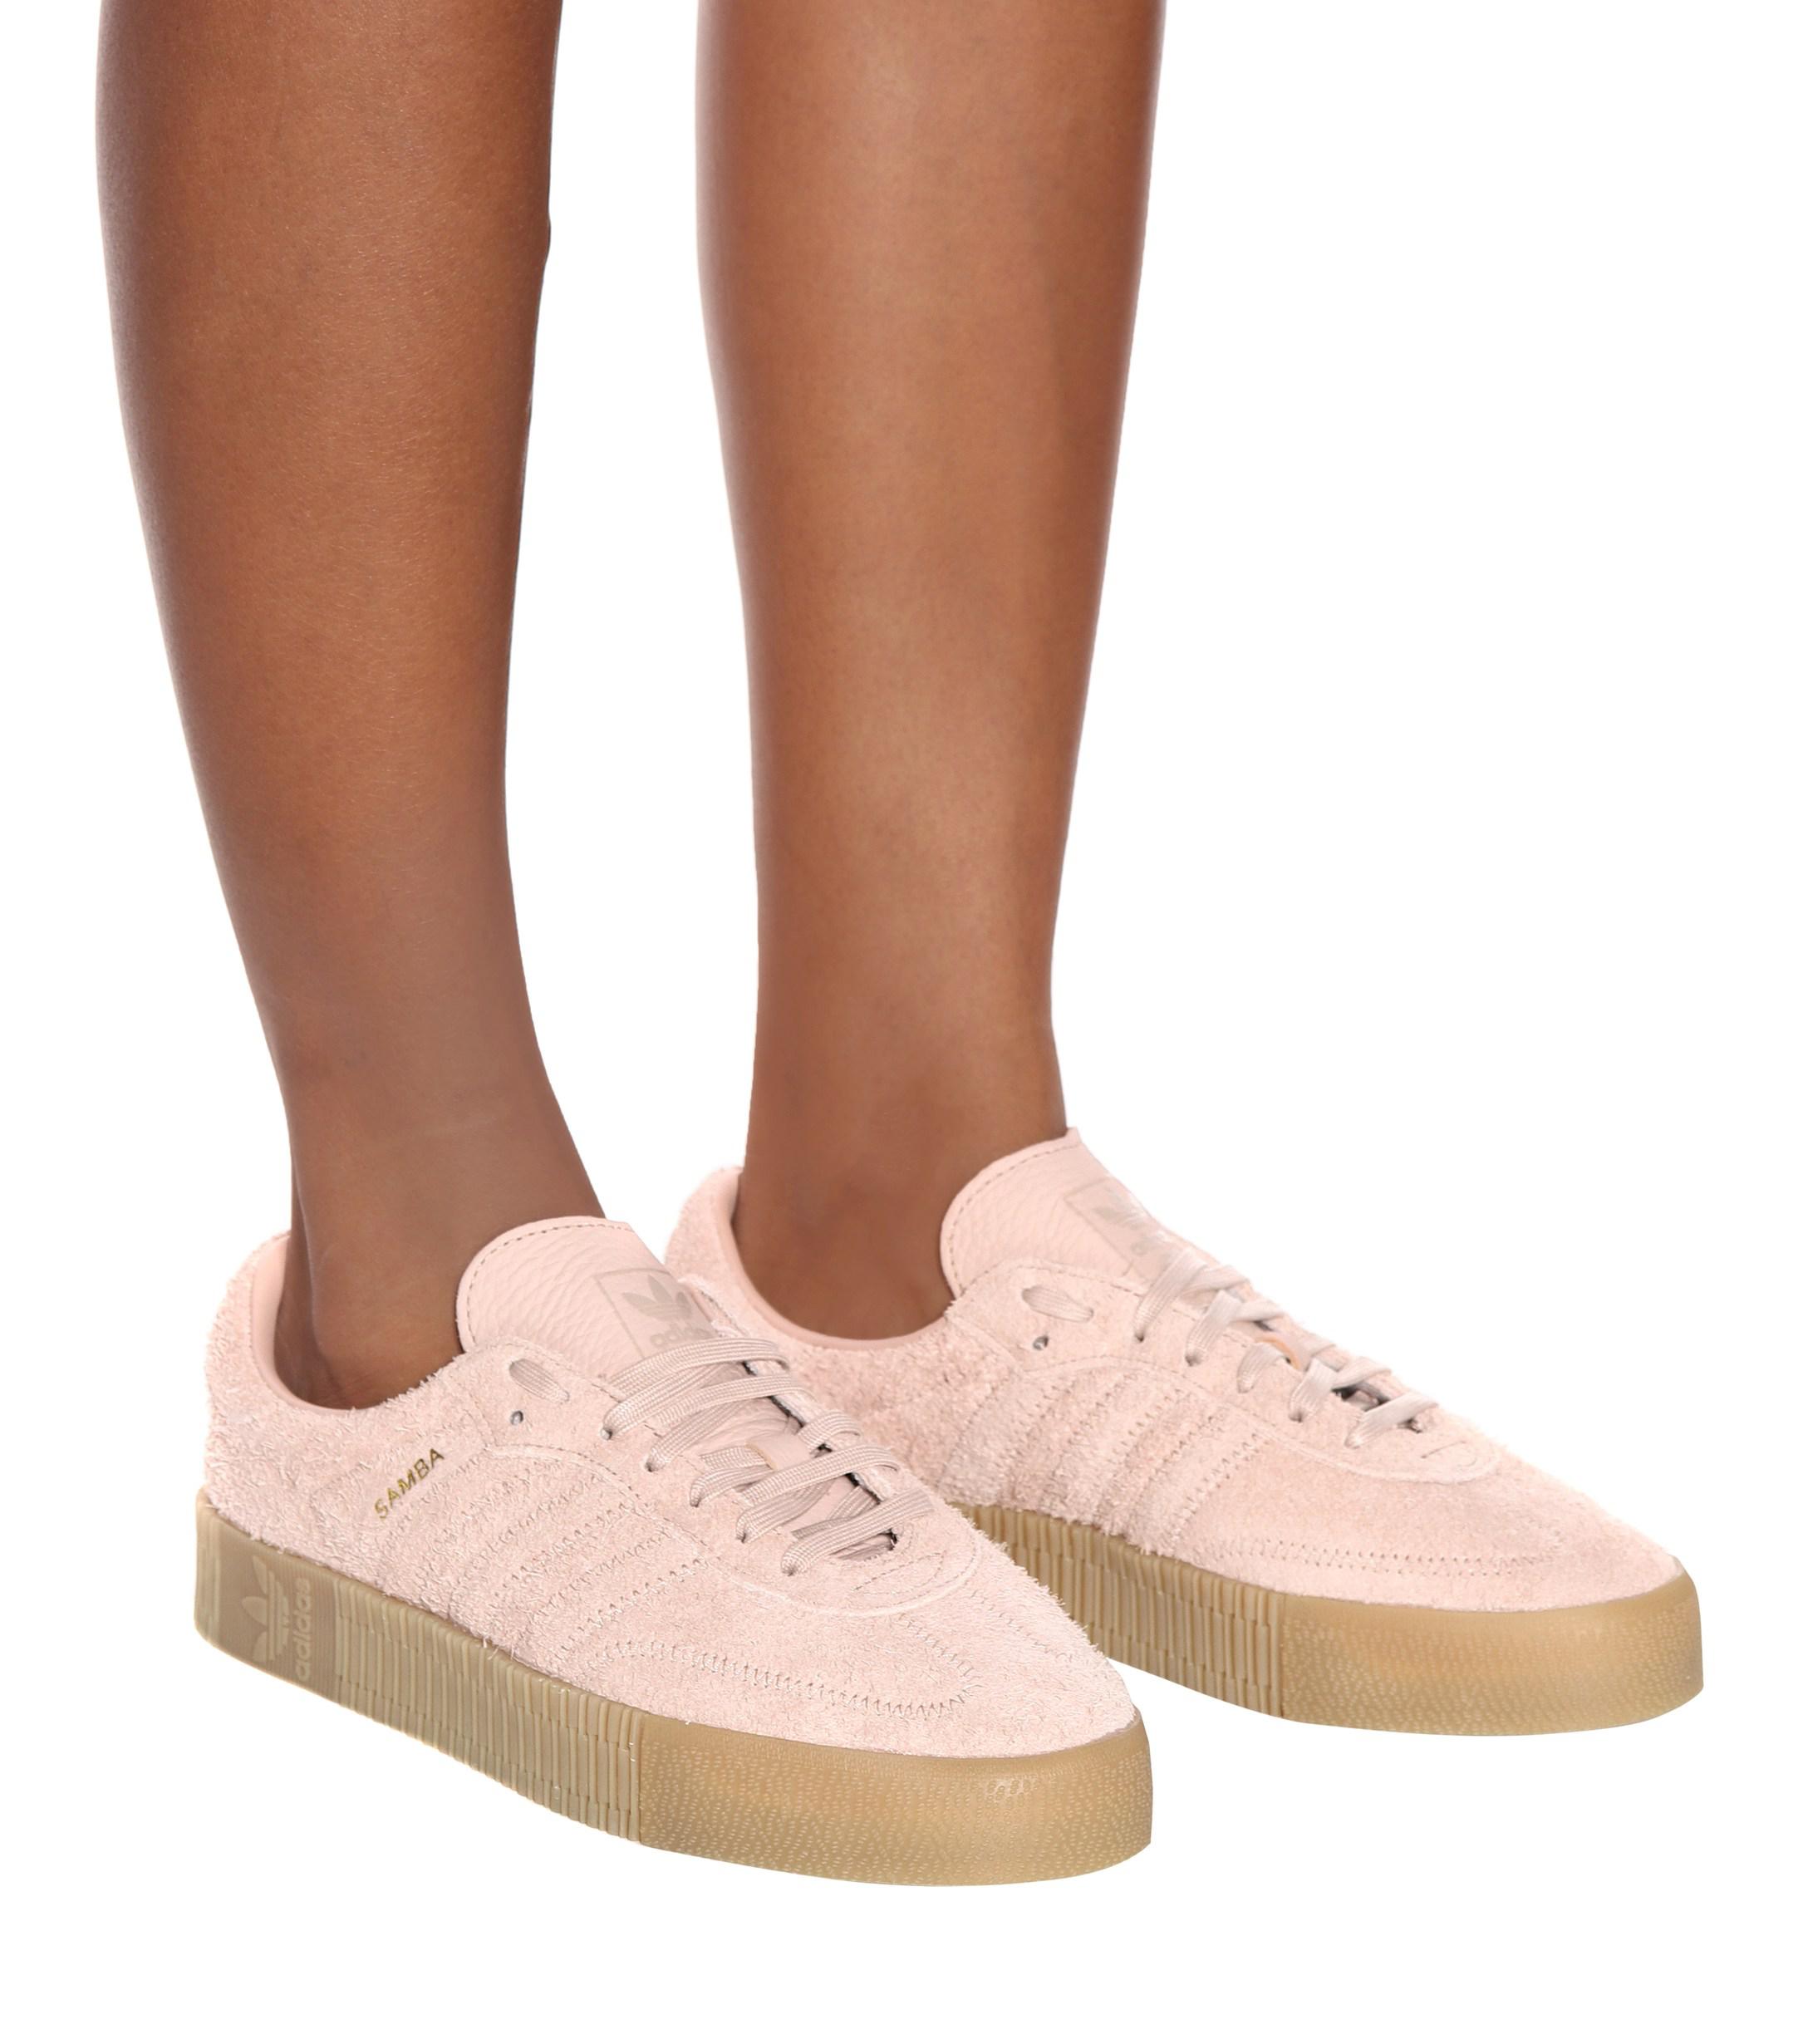 adidas Originals Sambarose Suede Sneakers in Pink - Lyst